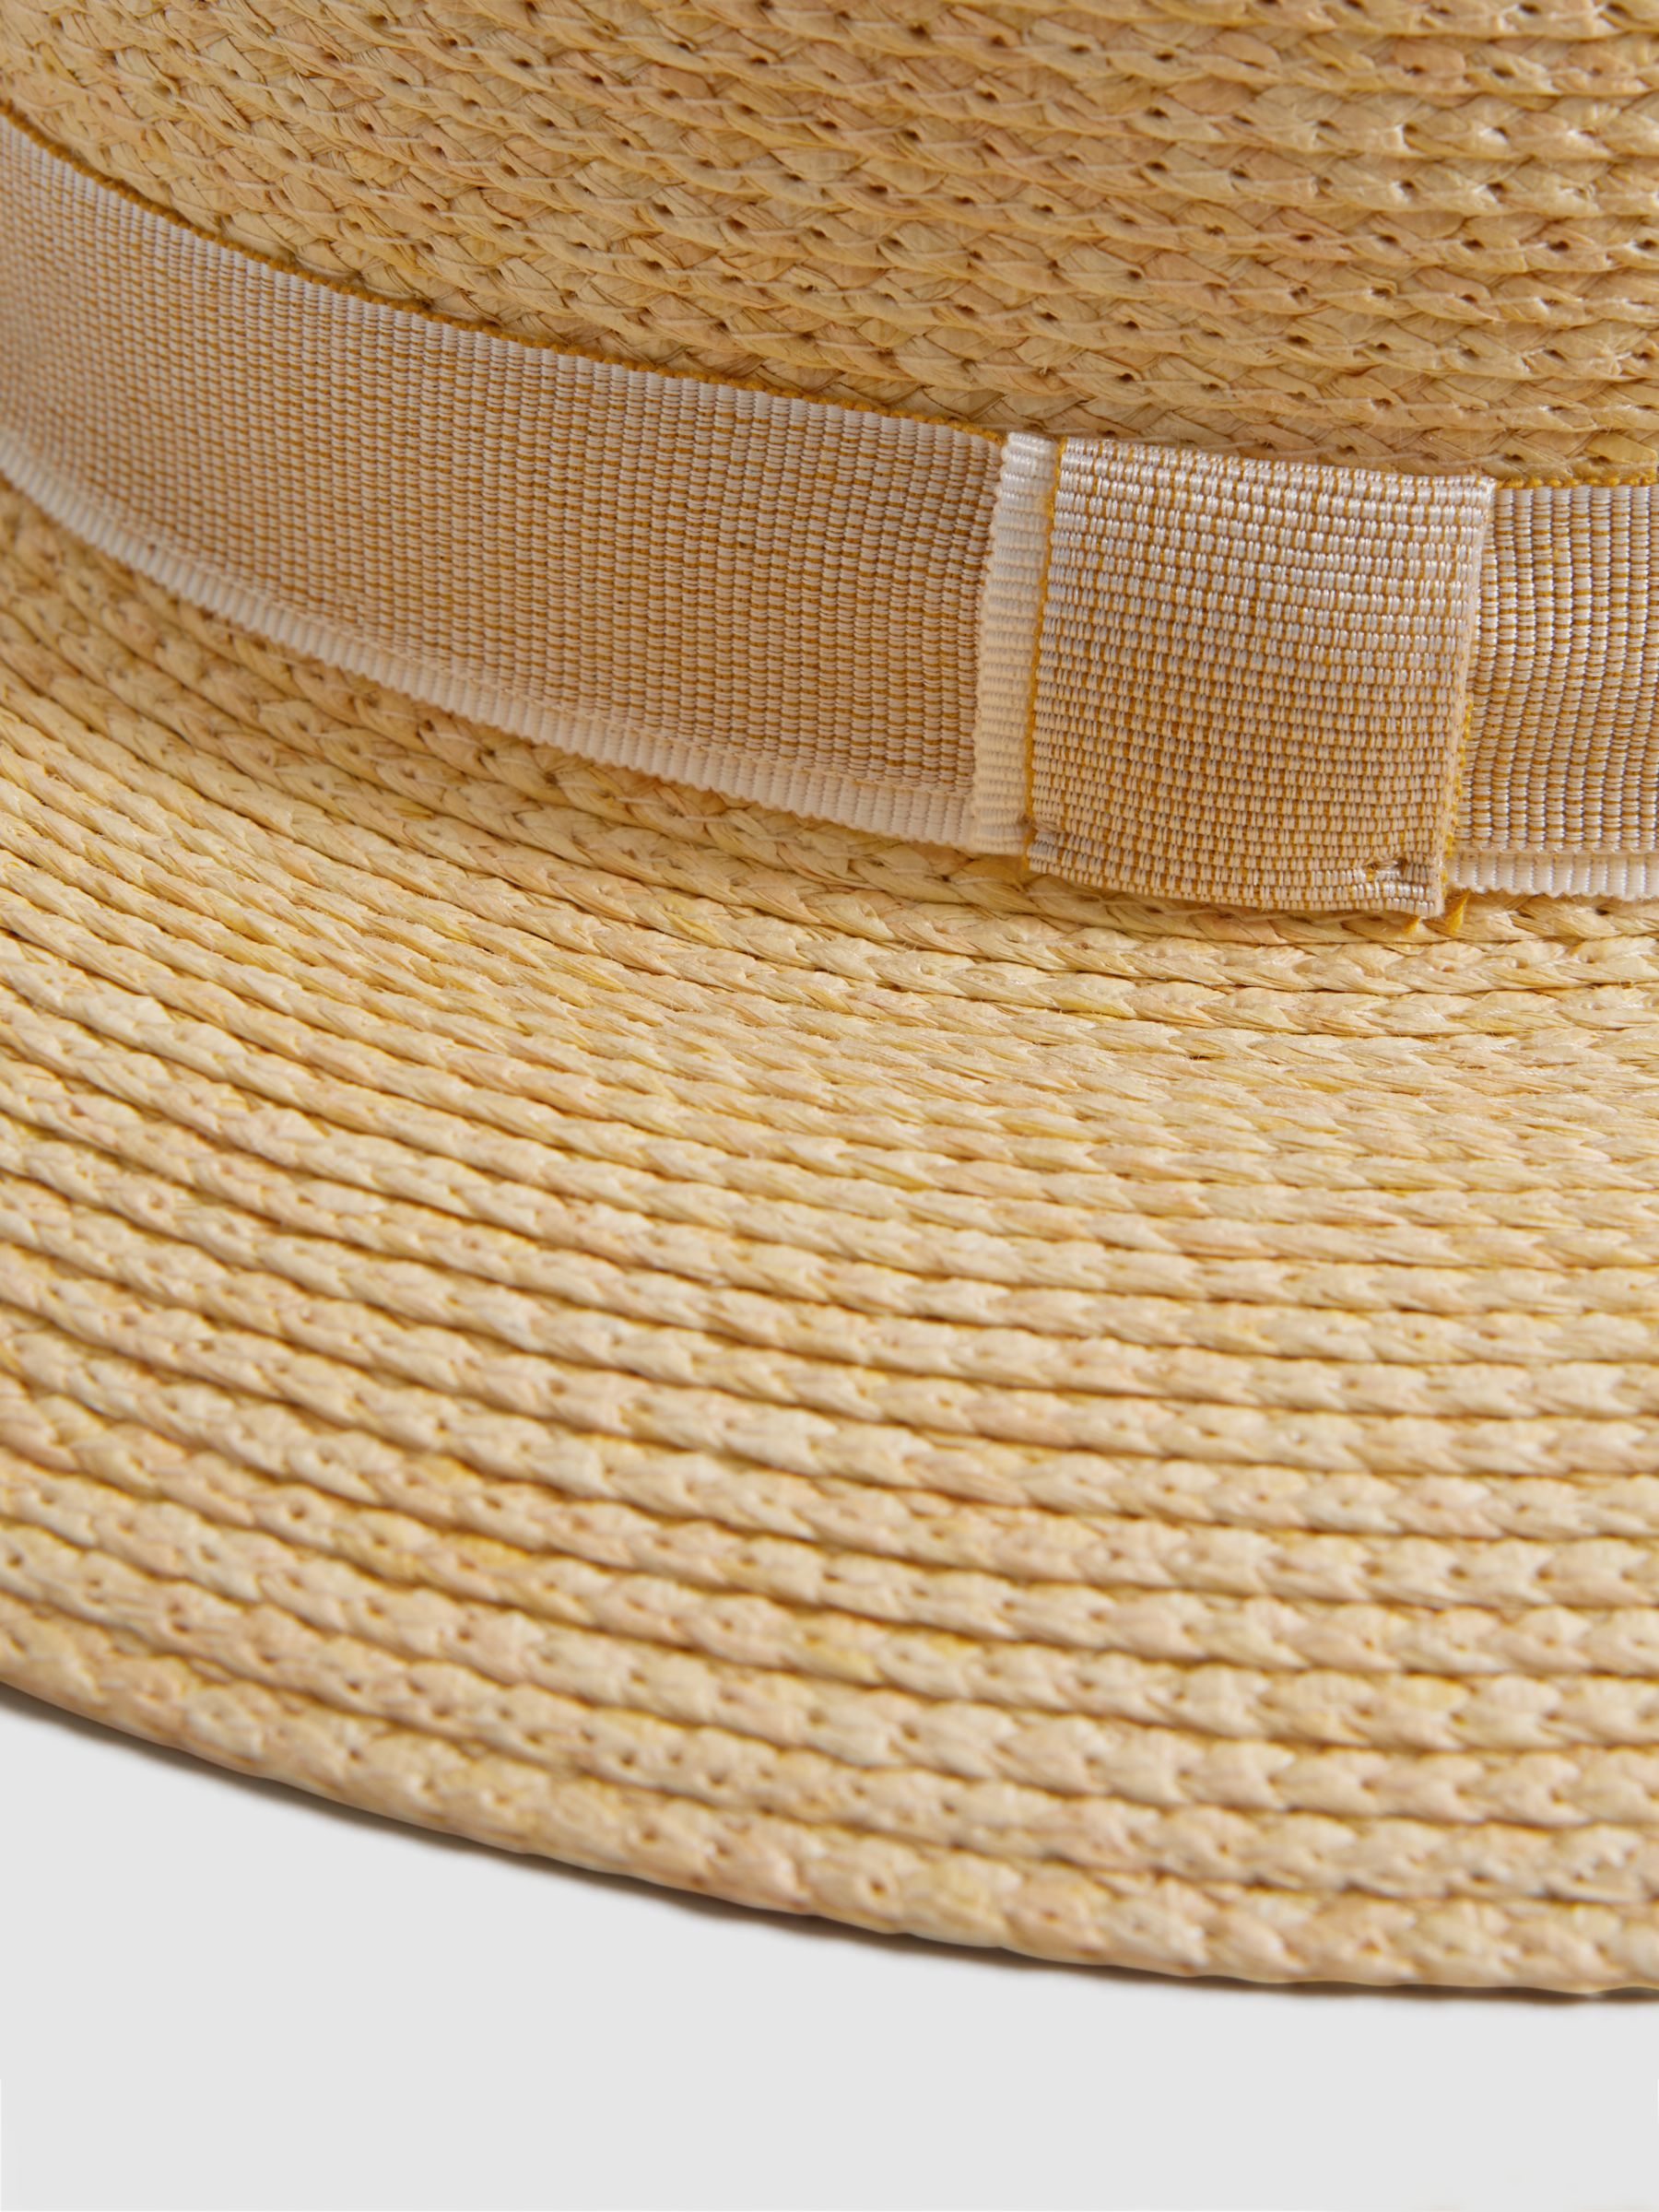 Reiss Gracie Short Brim Sun Hat, Natural, S-M